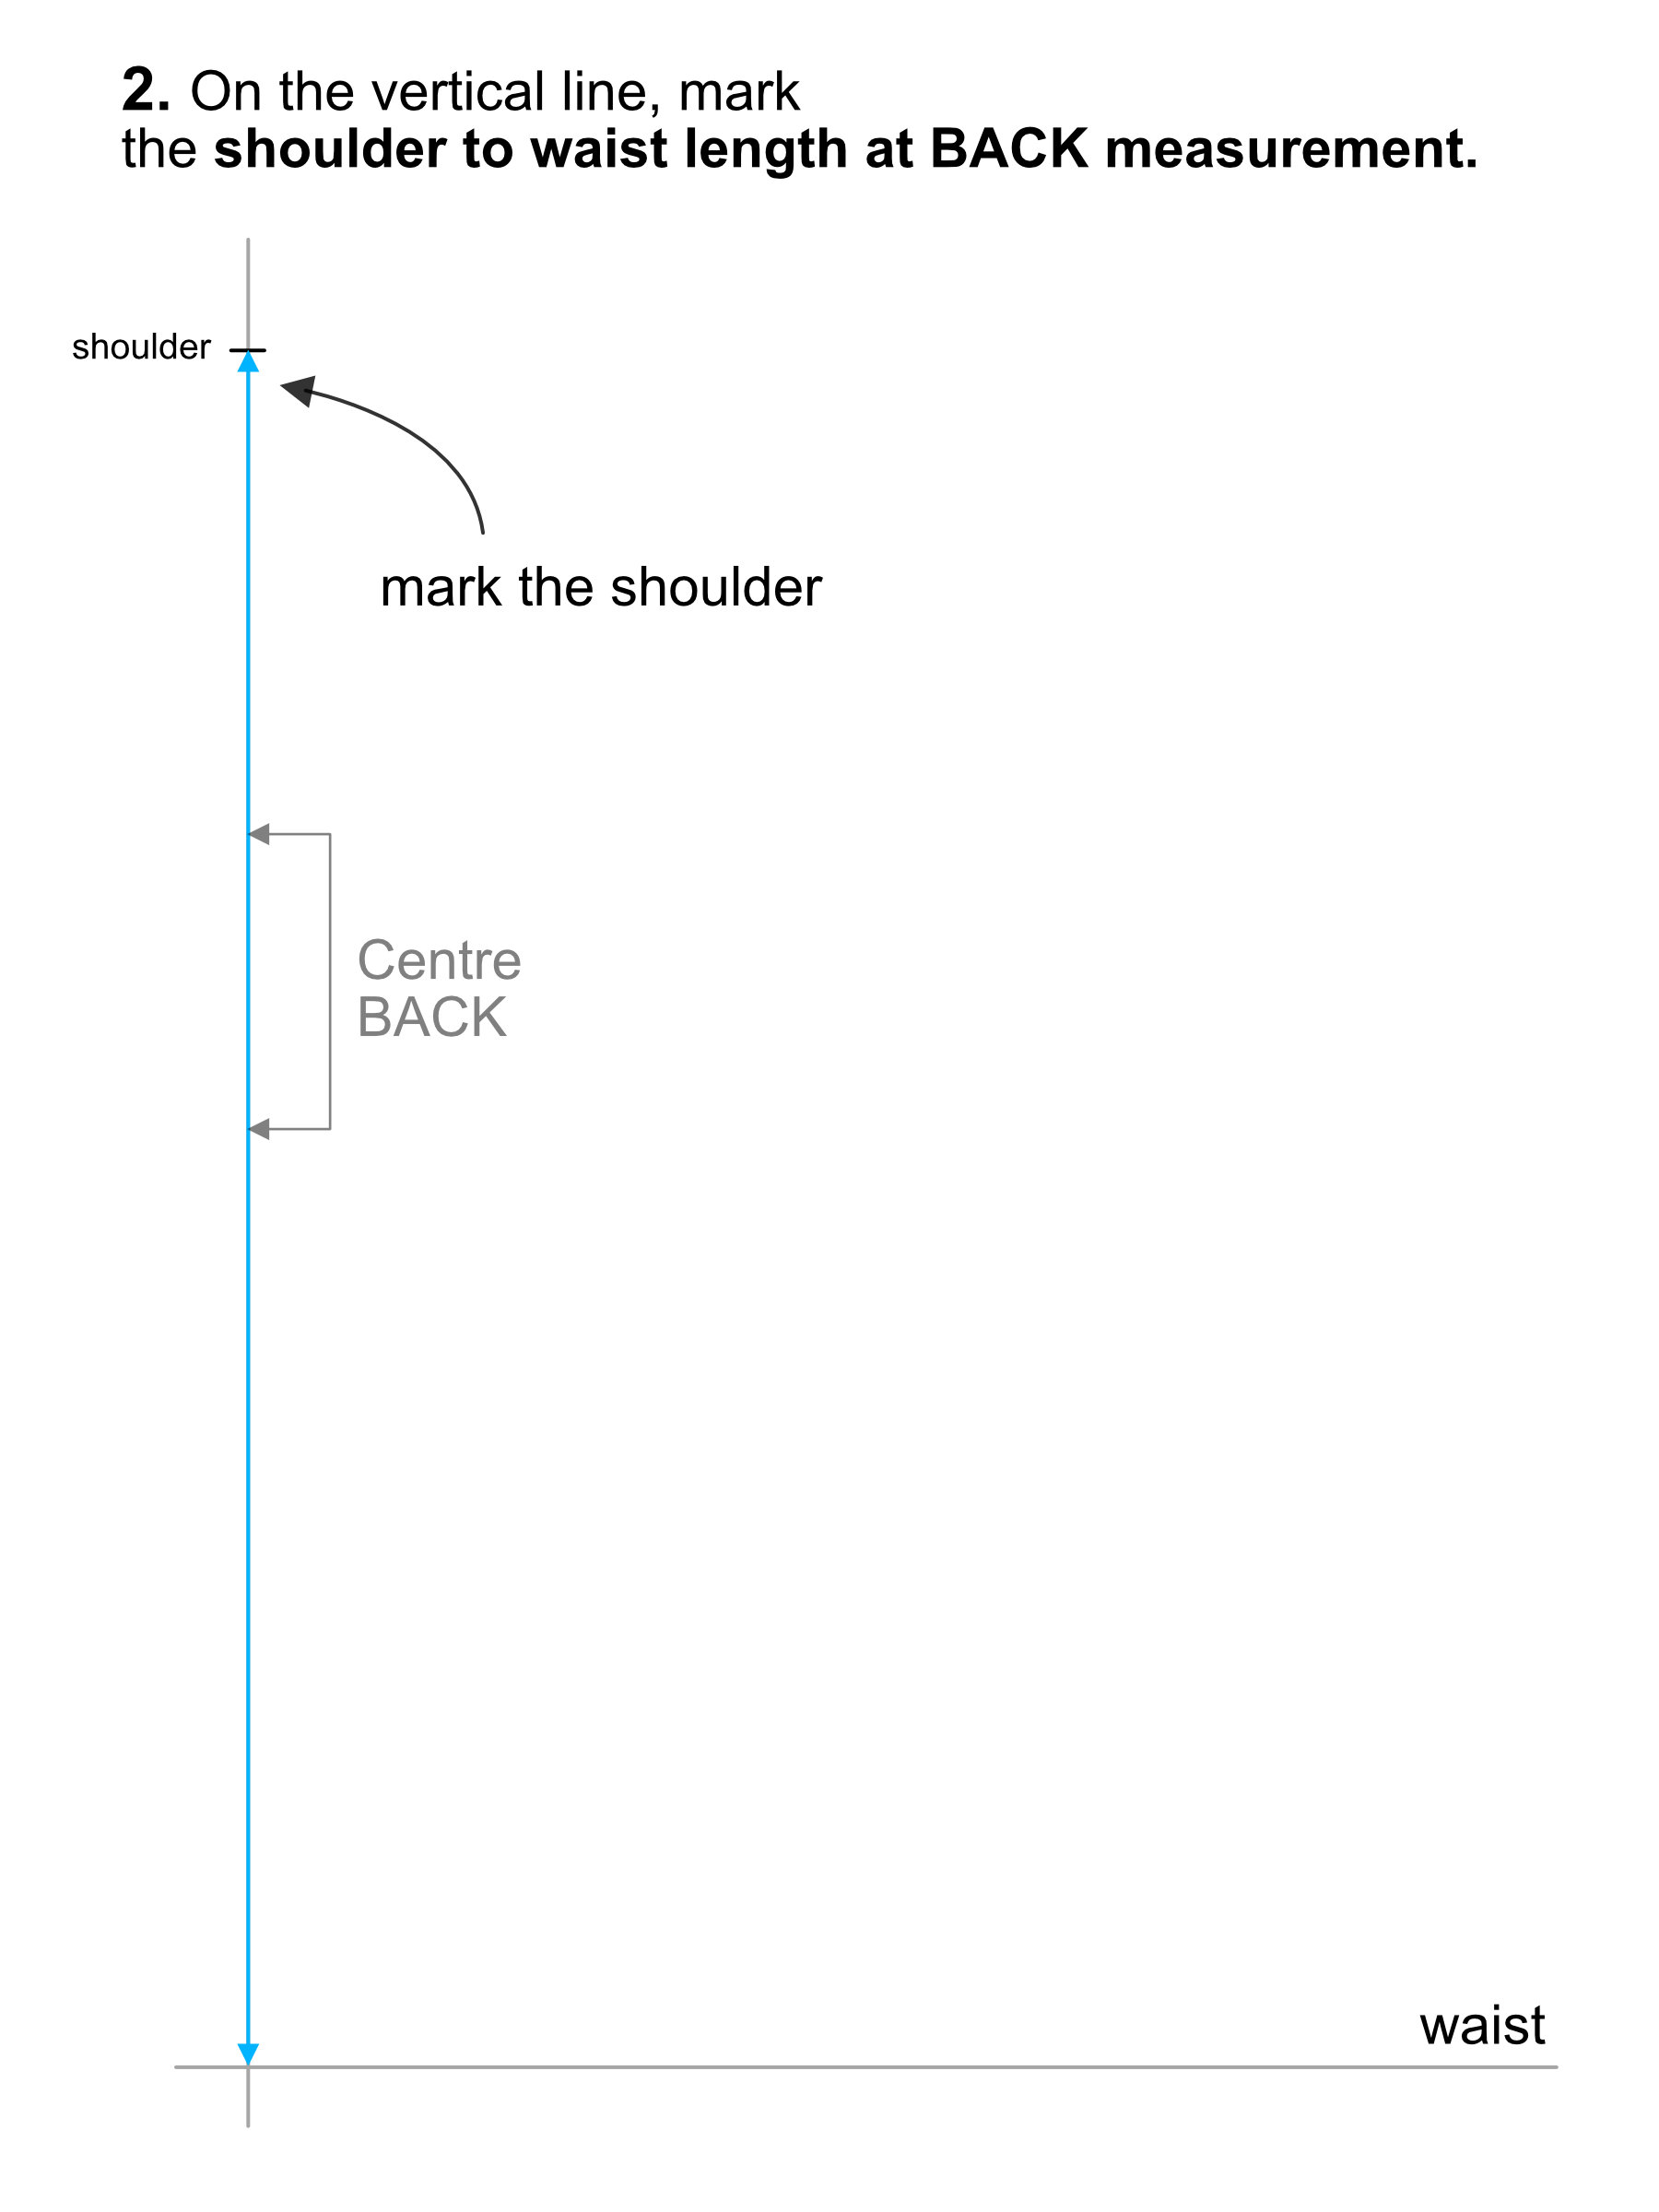 Marking the shoulder to waist length at back measurement on the vertical line.